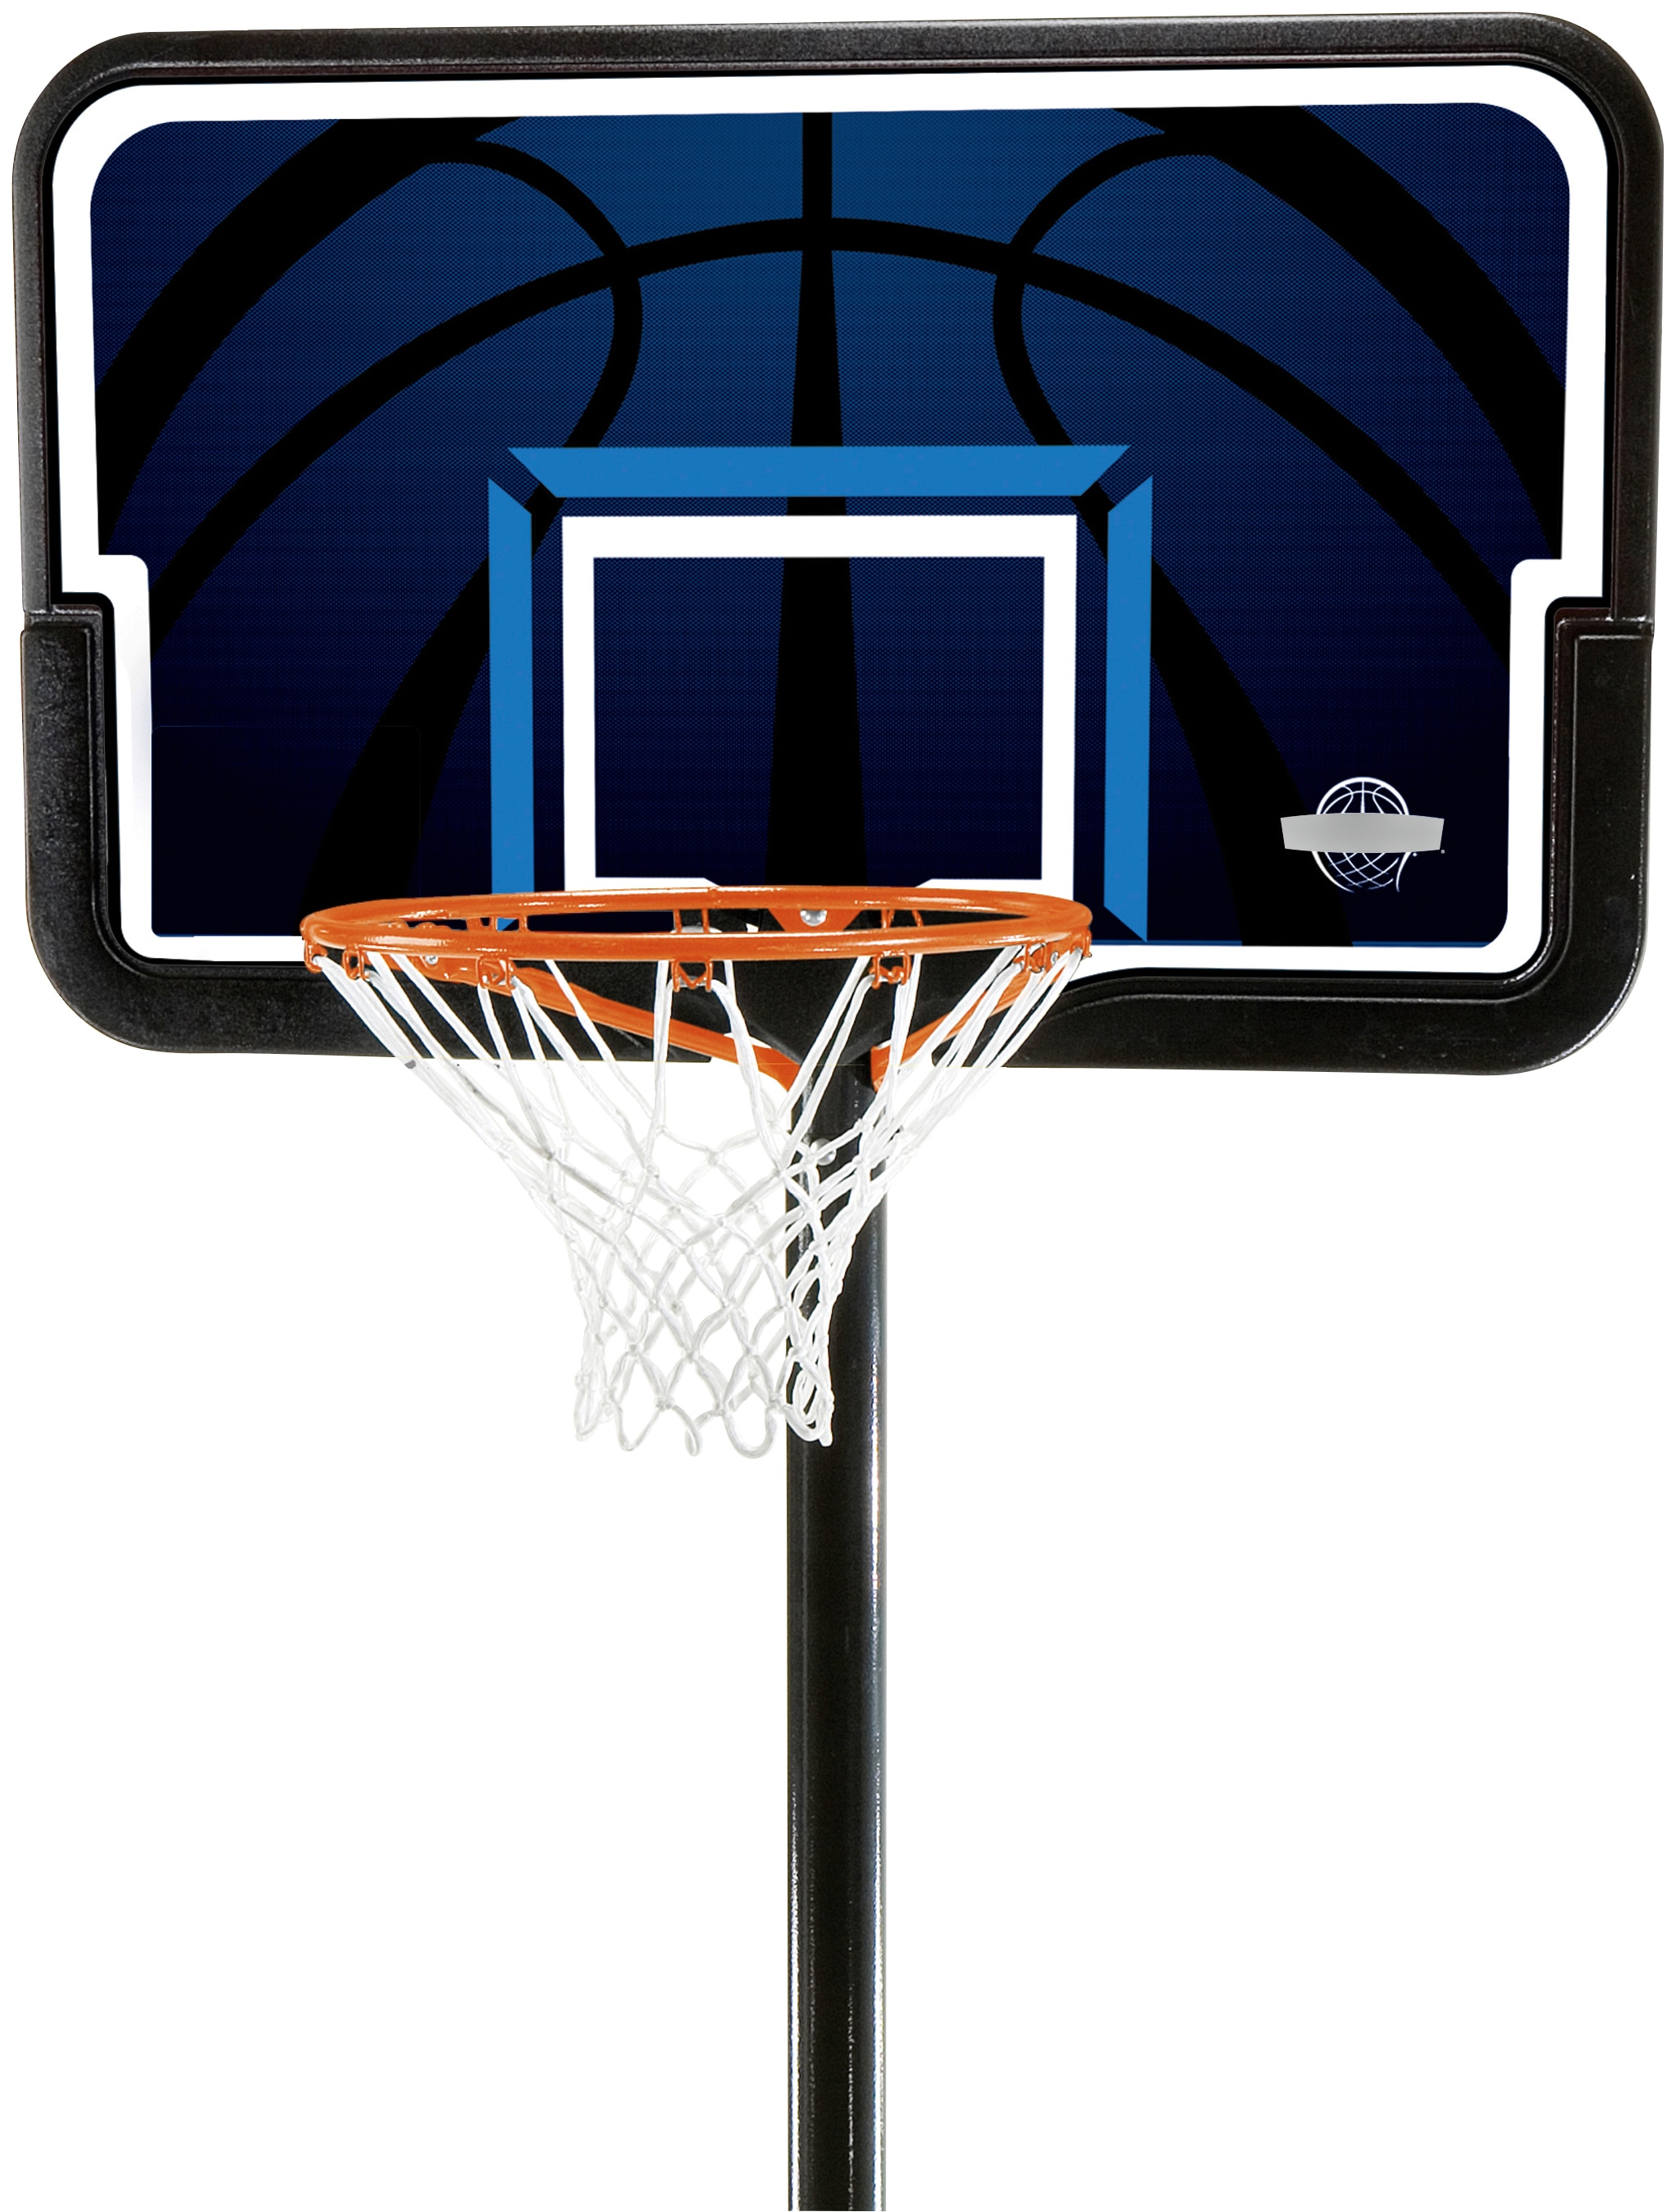 50NRTH Basketballkorb »Nevada«, höhenverstellbar BAUR schwarz/blau 